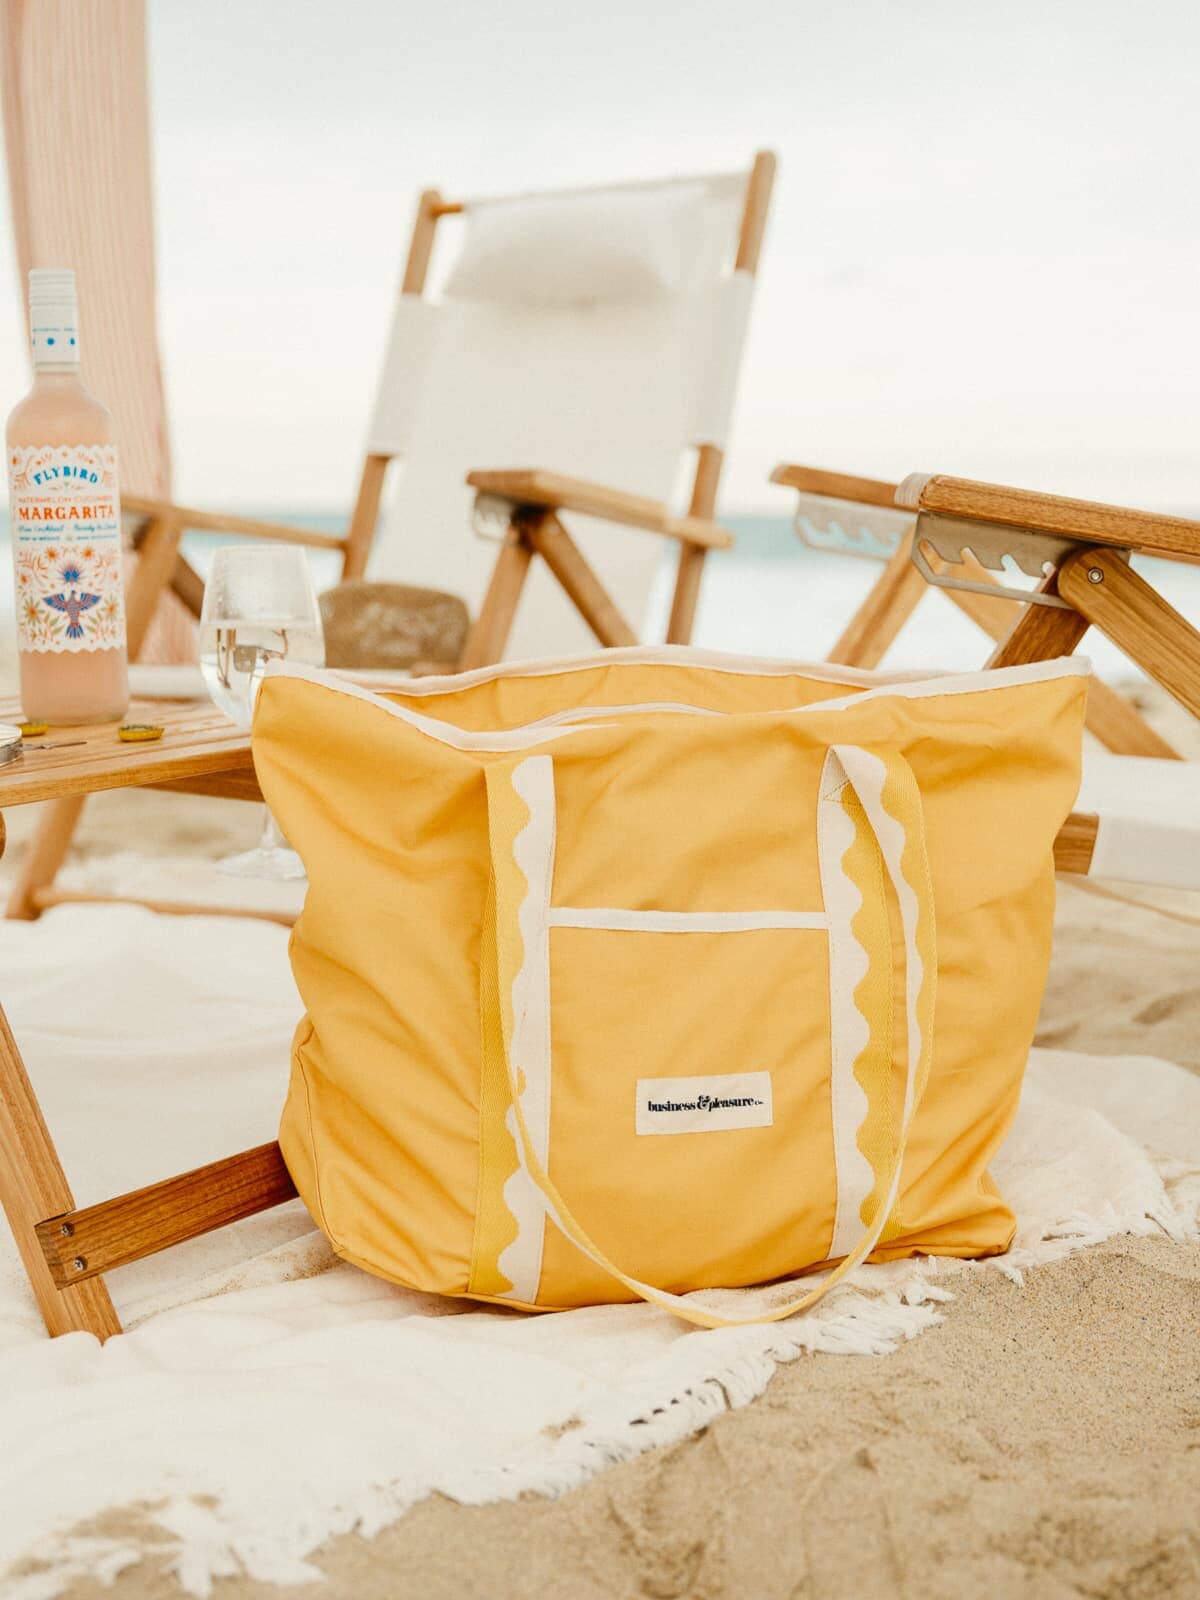 Riviera mimosa beach bag on the beach